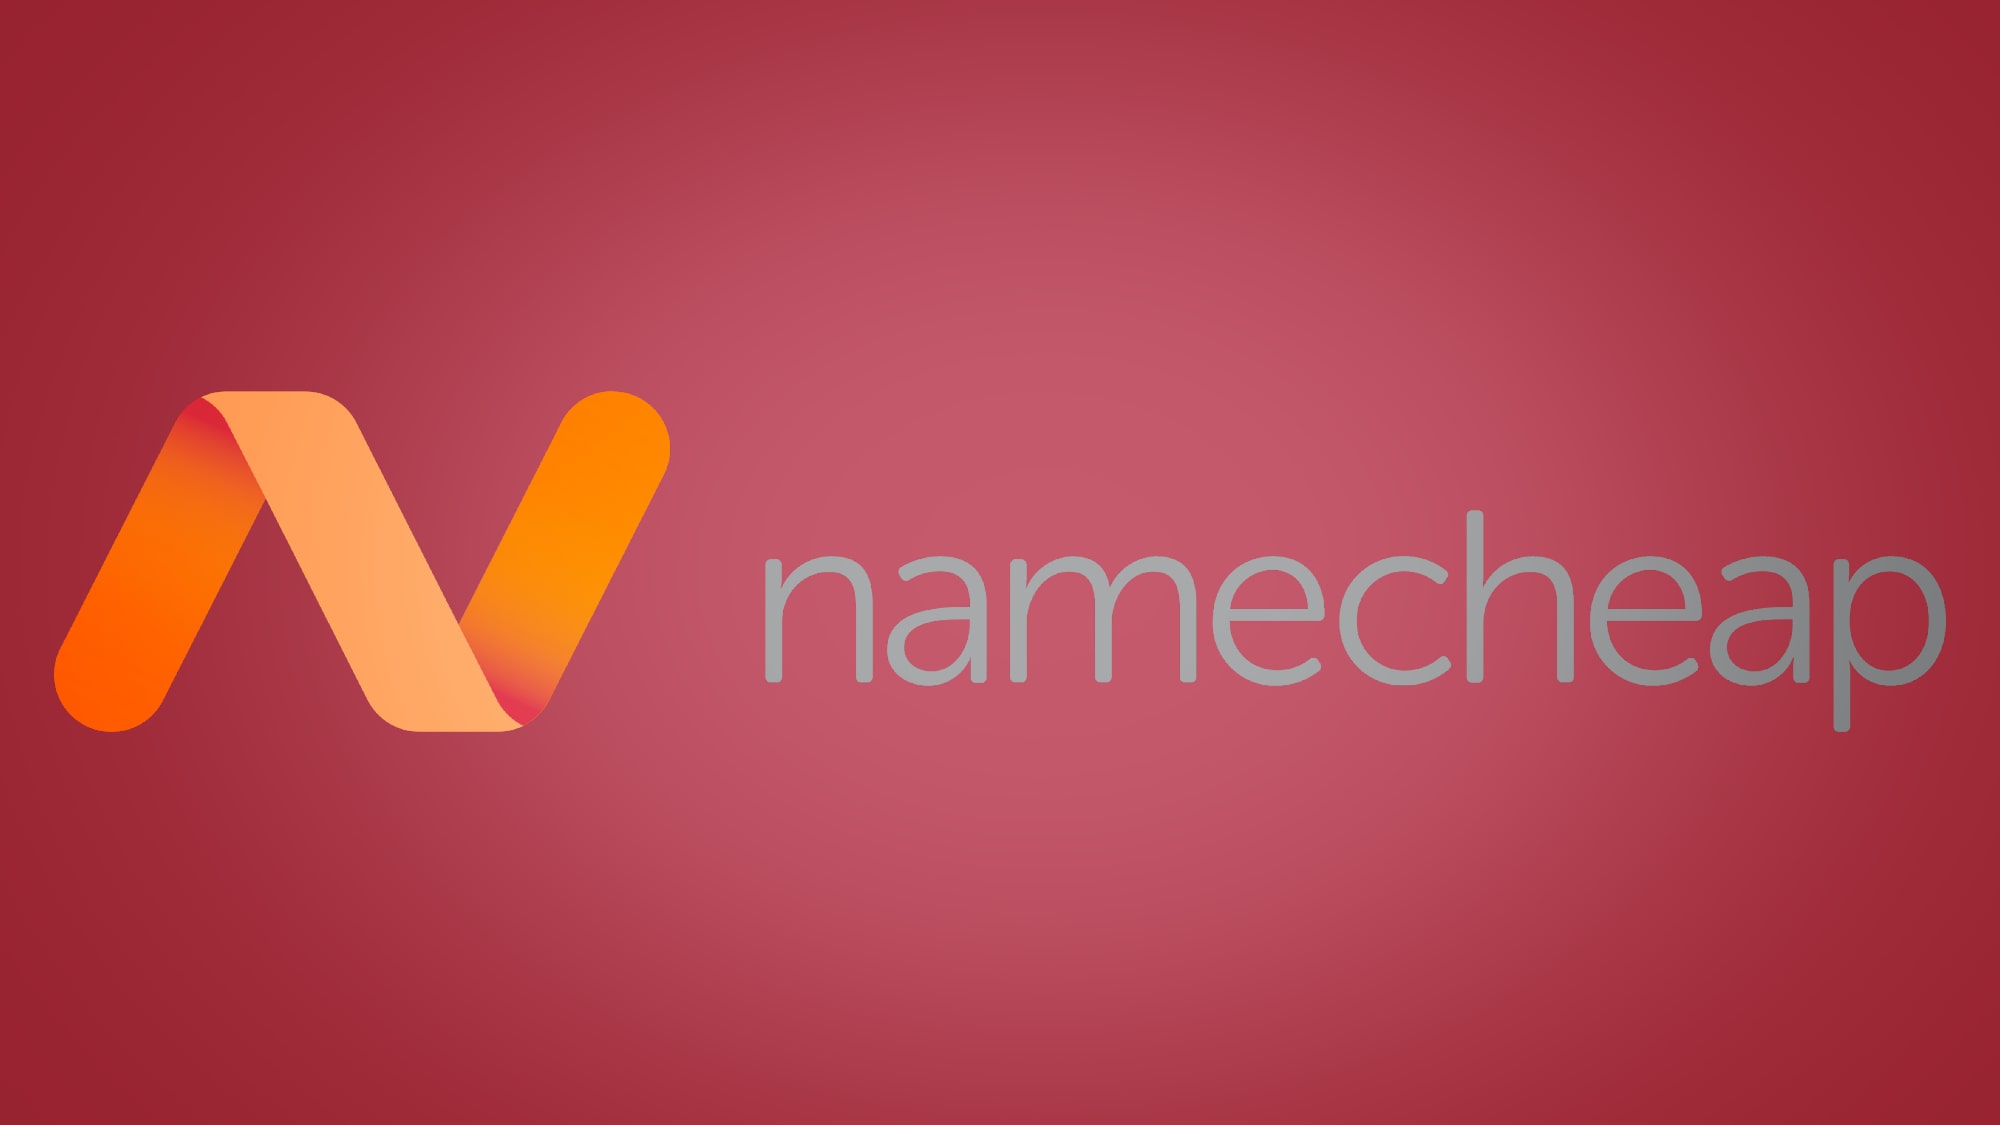 Namecheap logo in grey and orange on burgundy background